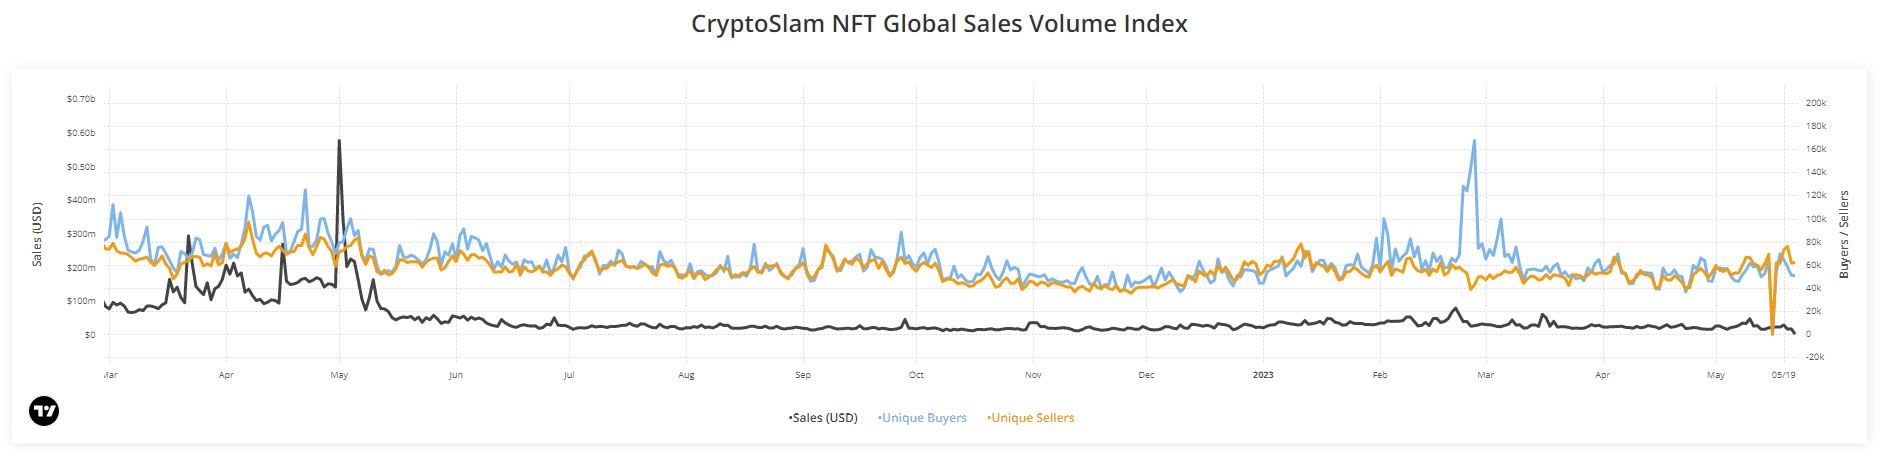 NFT Sales Volumes 1 year | CryptoSlam